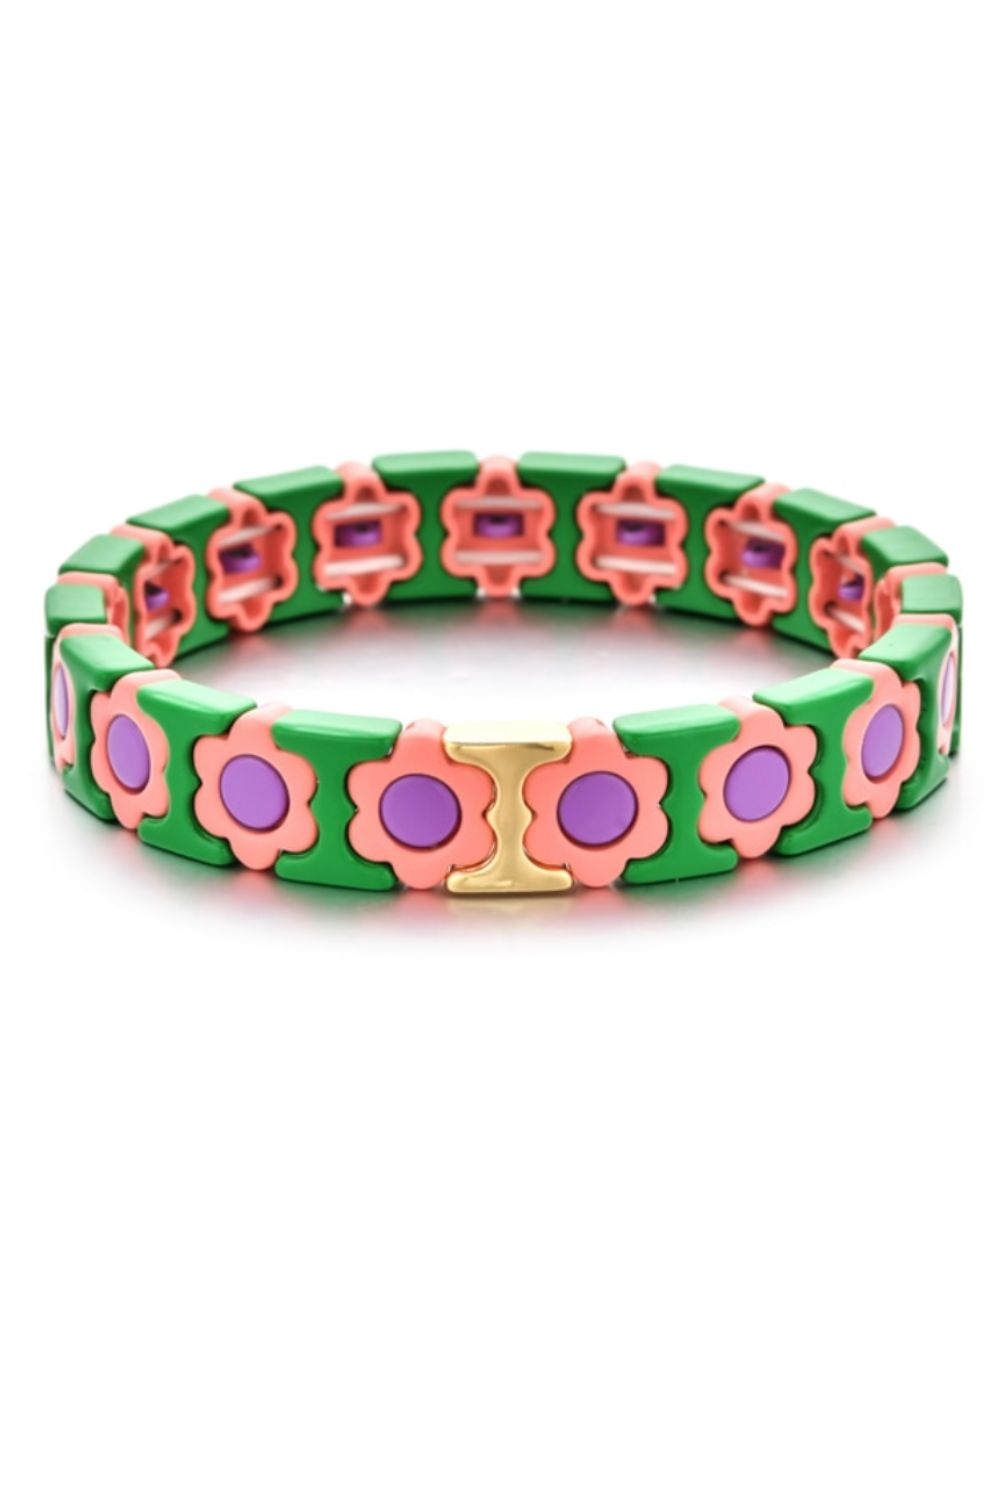 Daisy chain bracelet - green/peach/purple